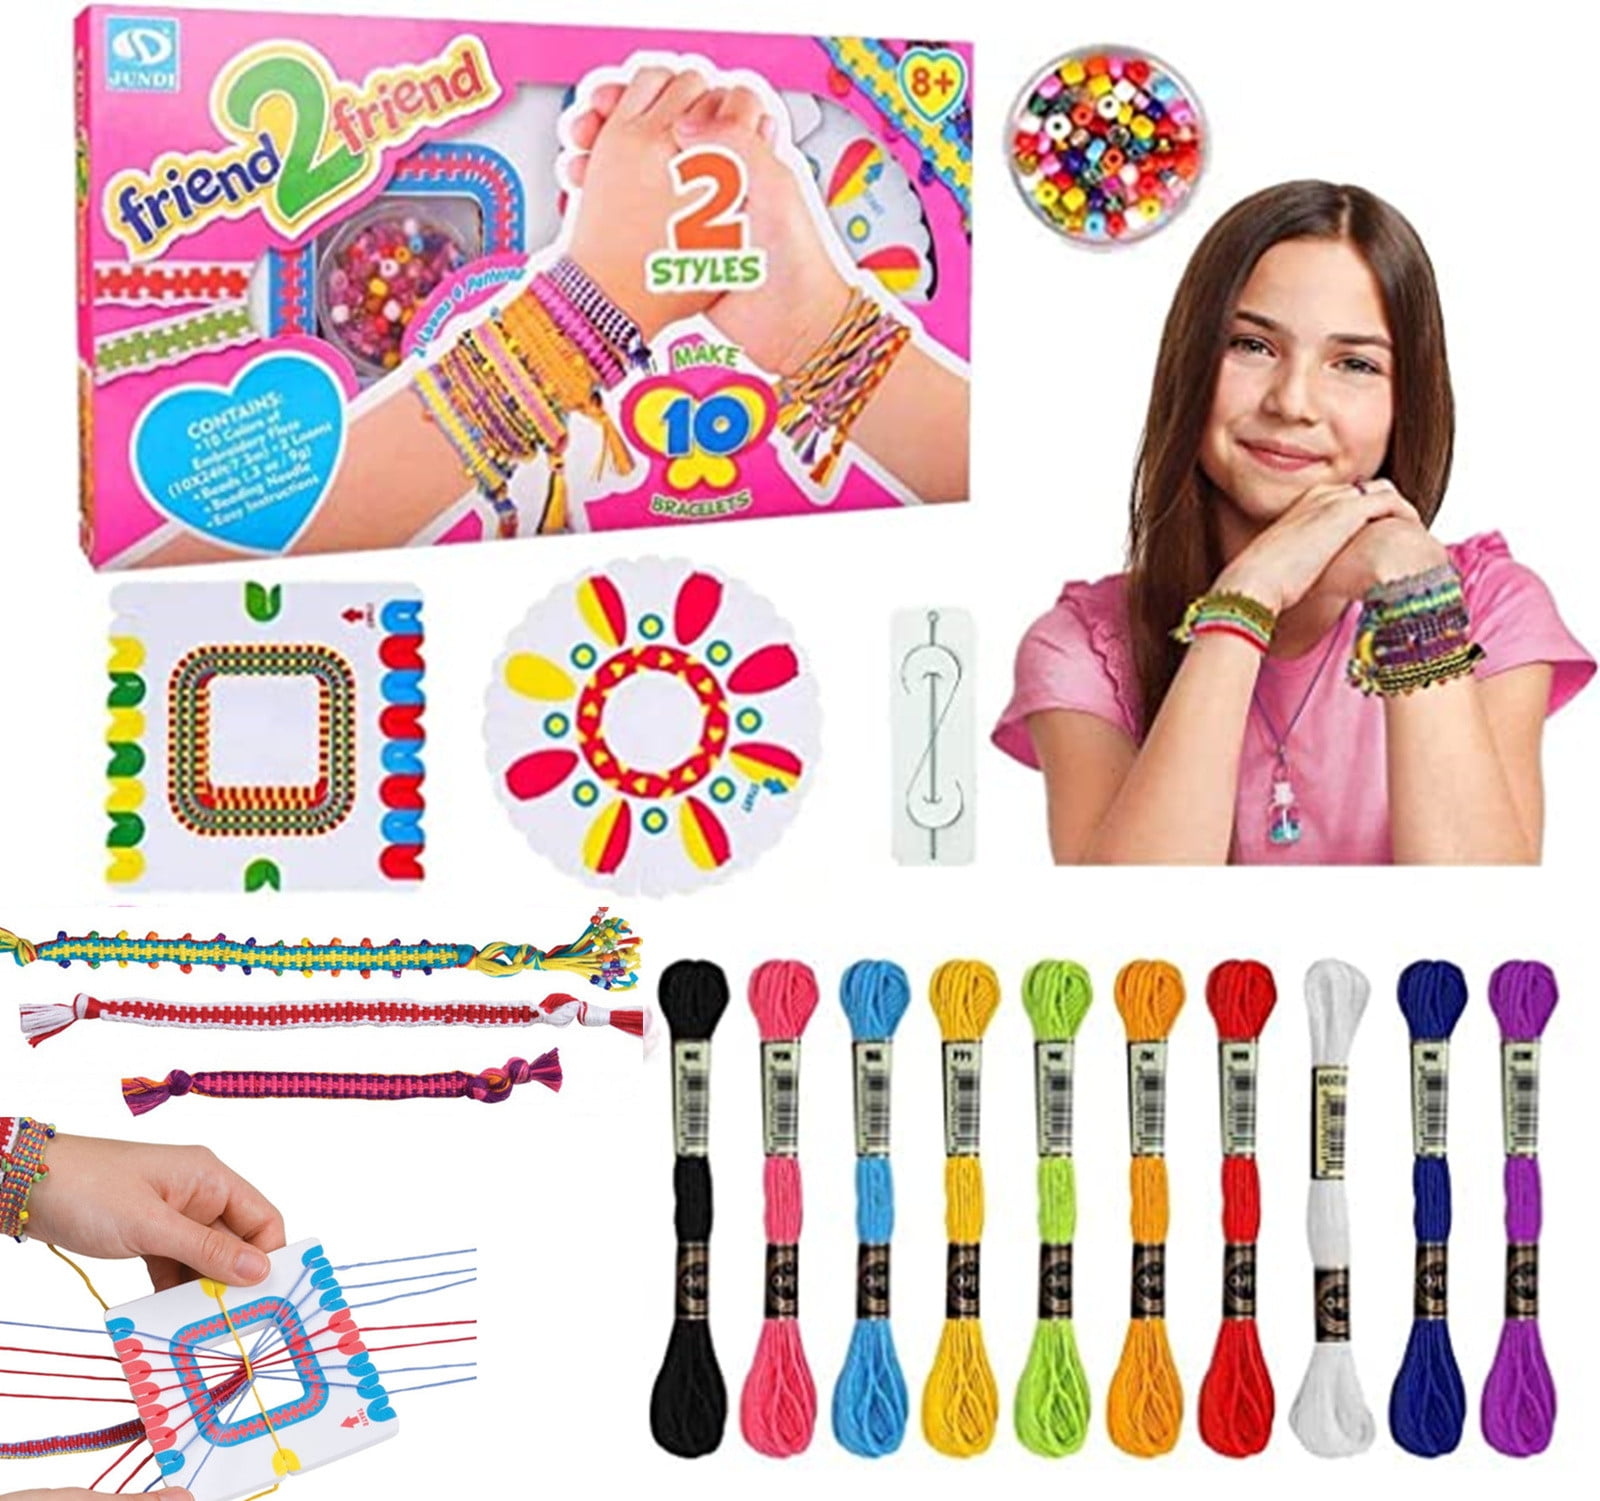 Choose Friendship, My Friendship Bracelet Maker, 20 Pre-Cut Threads Craft Kit Kids Jewelry Kit Coconut